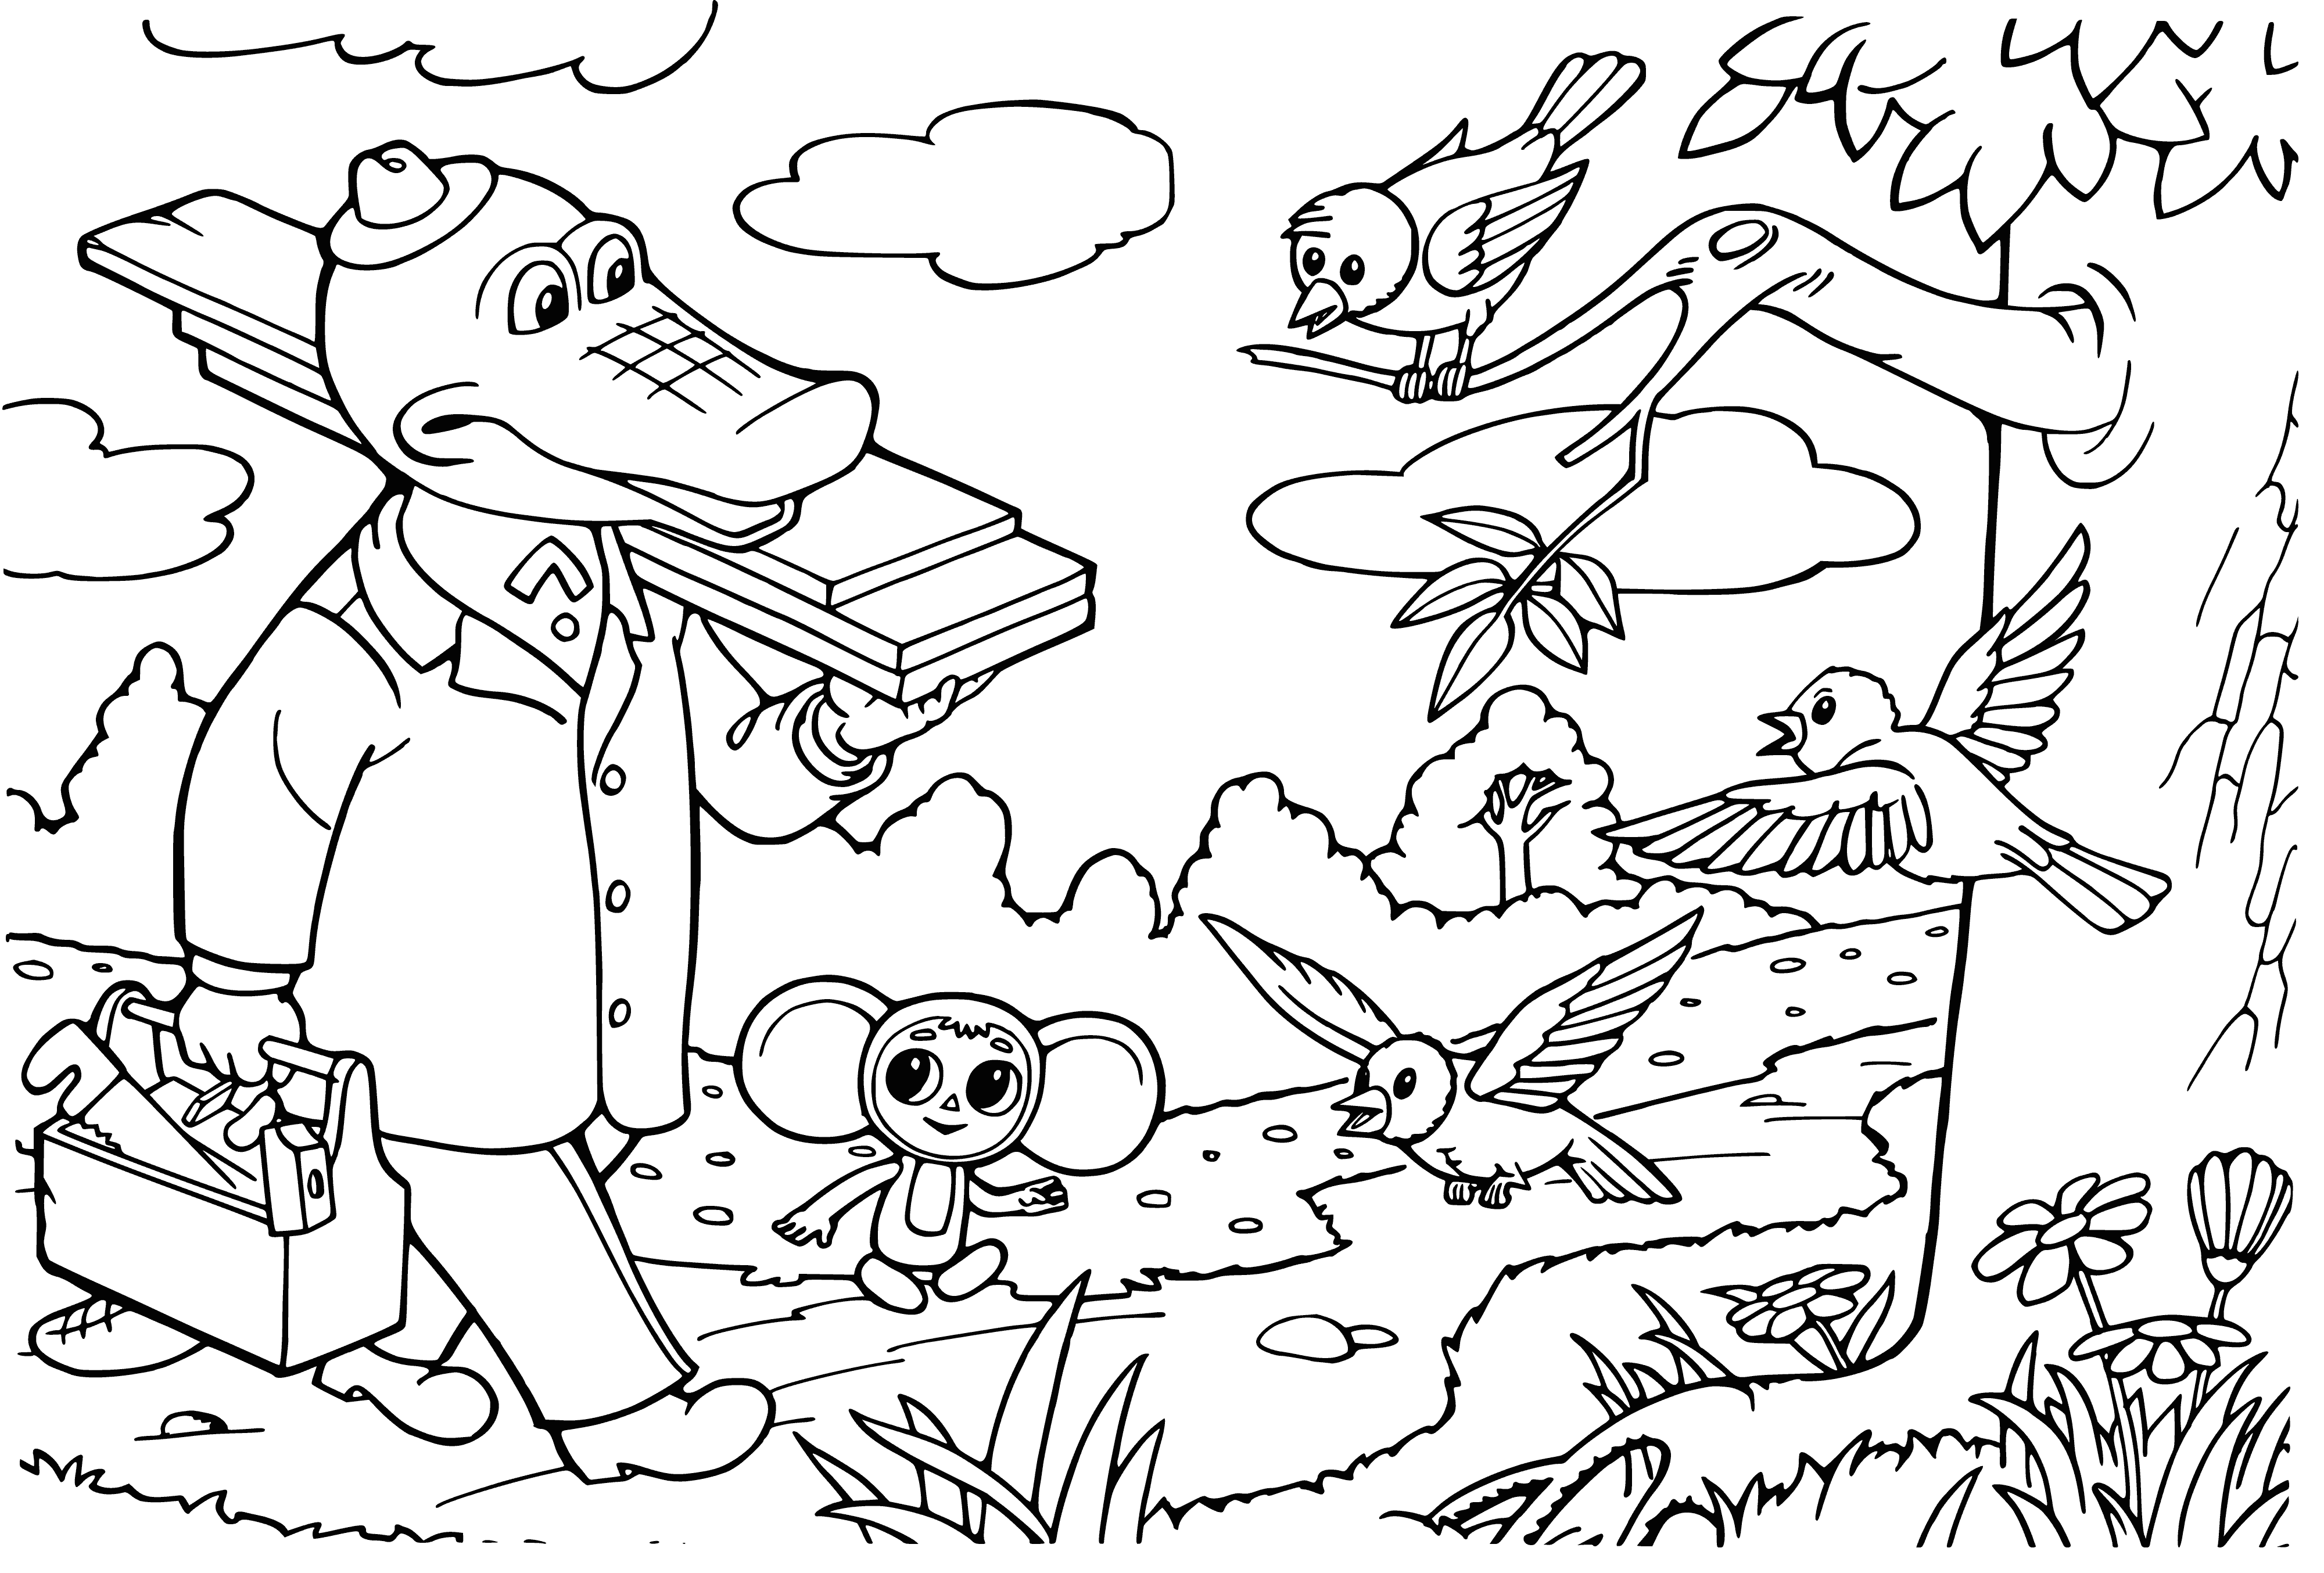 Gena and Cheburashka stand together; Cheburashka holding a carrot; Shapoklyak atop a tree in bg.